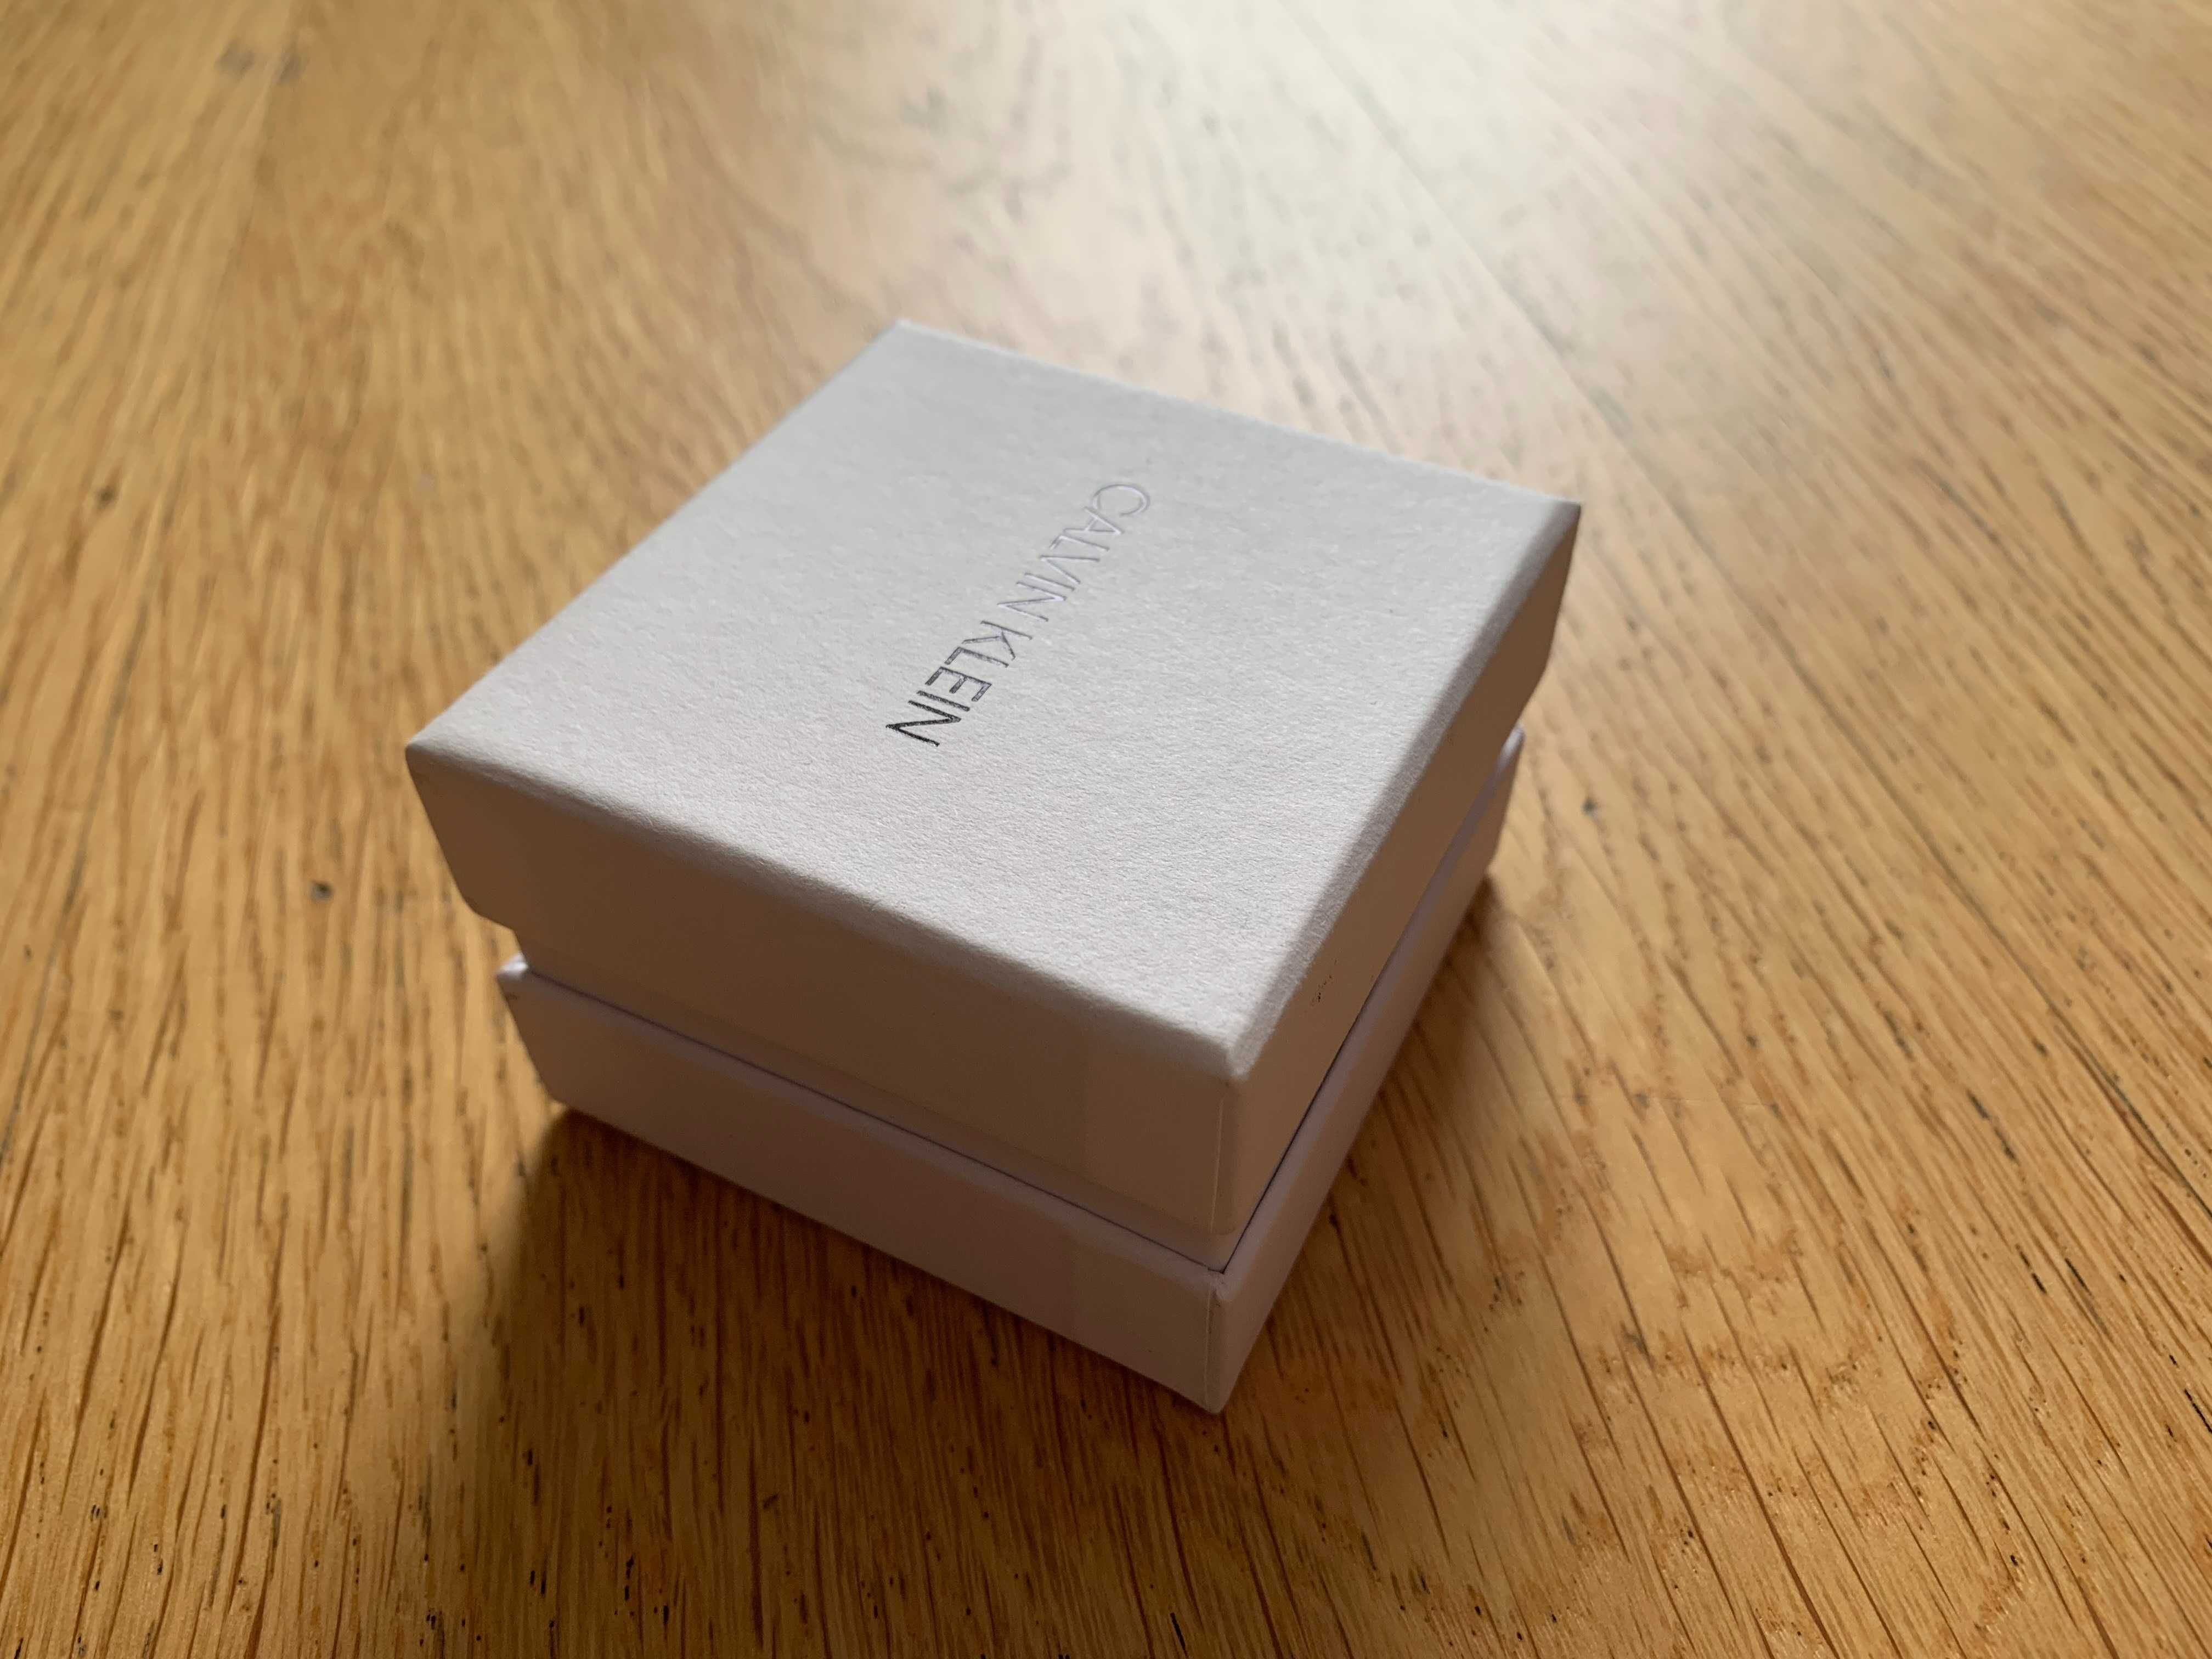 Pudełeczko kartonik na biżuterię CK Calvin Klein biały